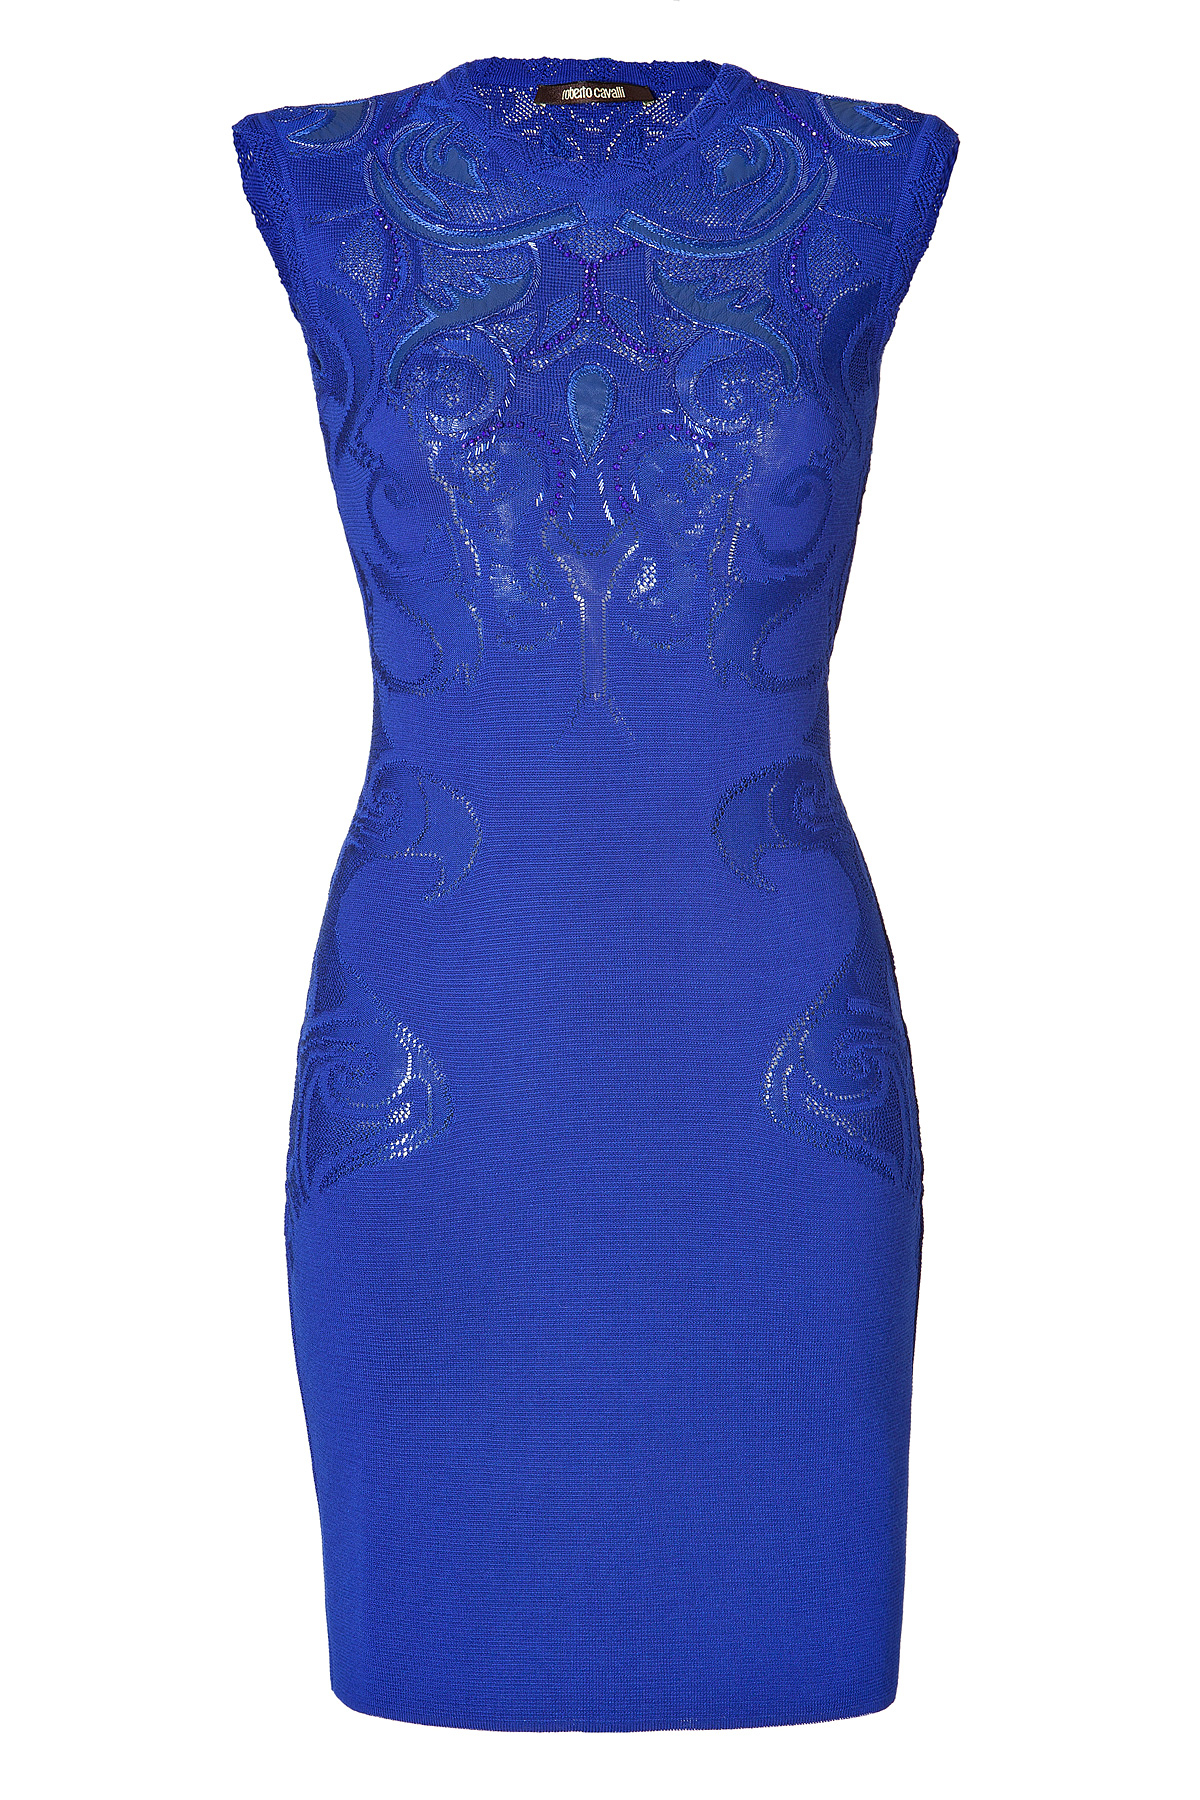 Lyst - Roberto Cavalli Wool Blend Intarsia Knit Dress In Cobalt in Blue